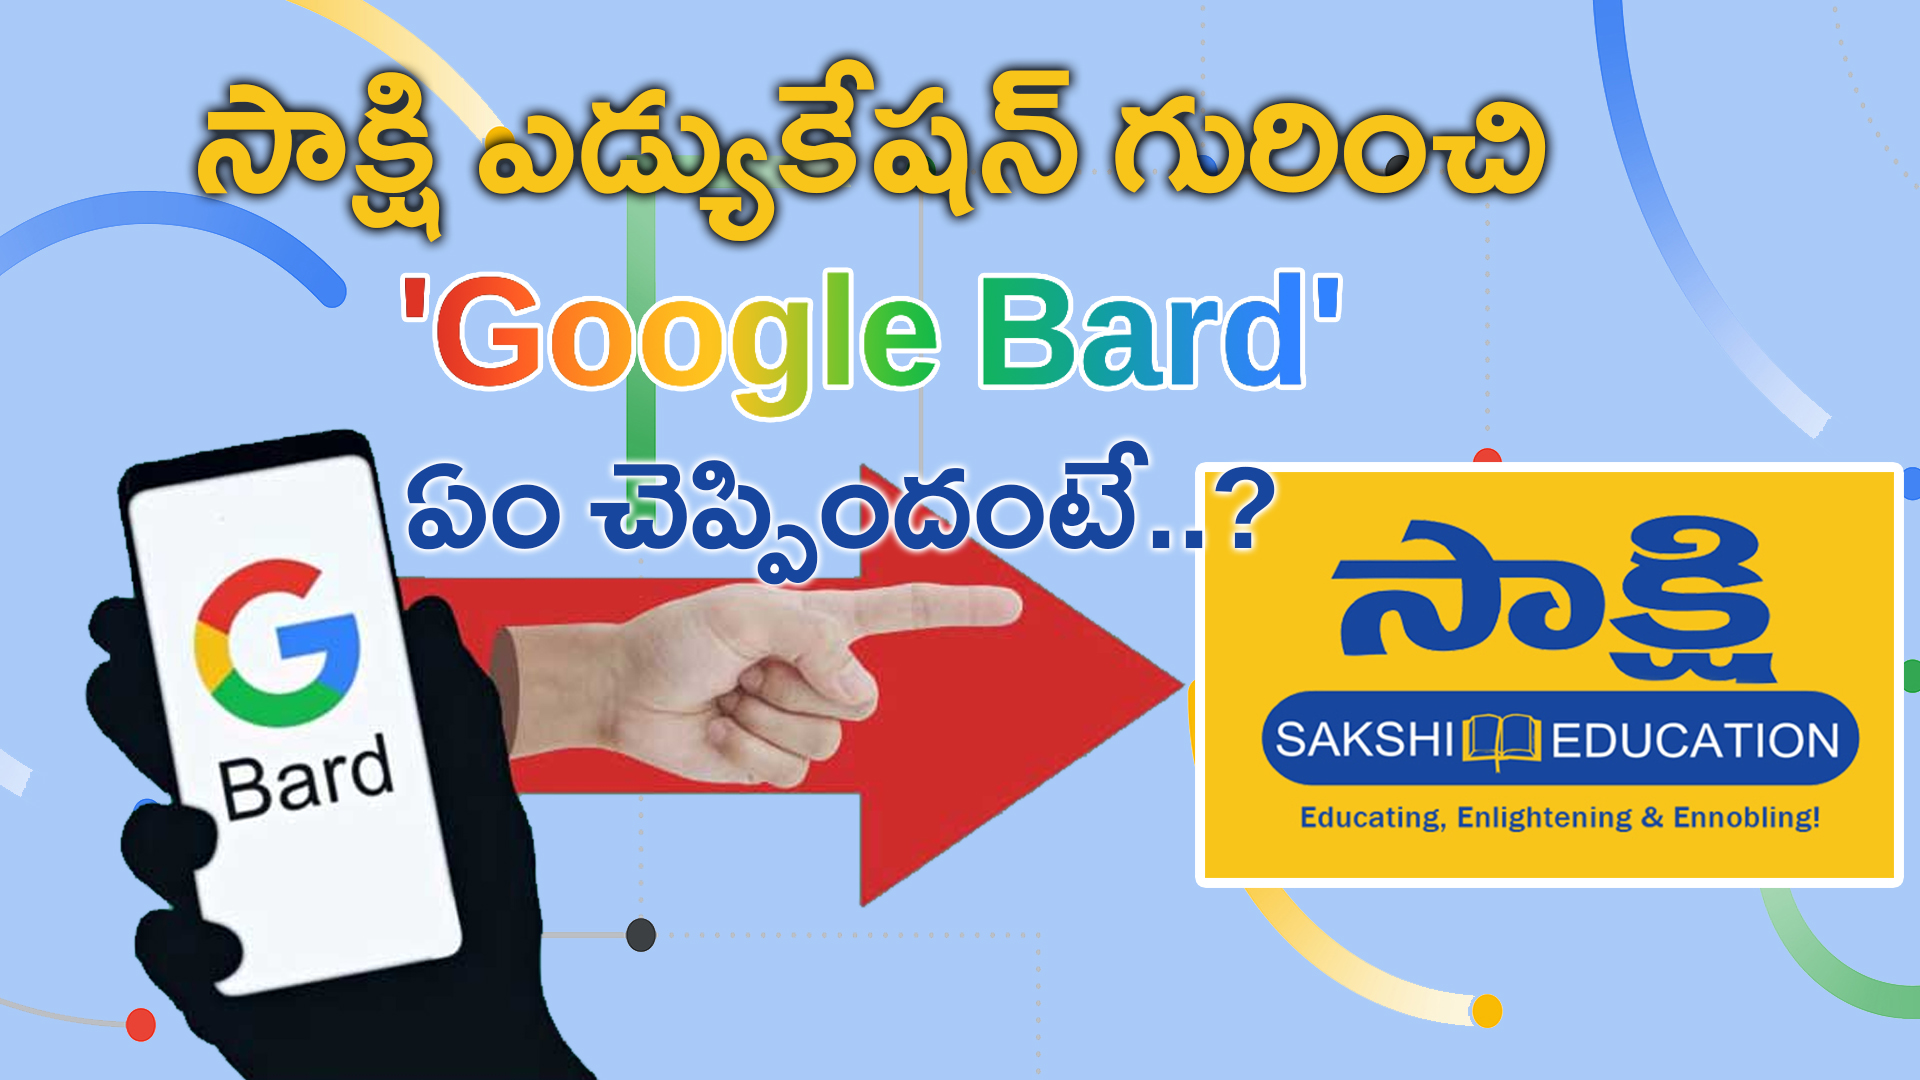 Google Bard and sakshi education